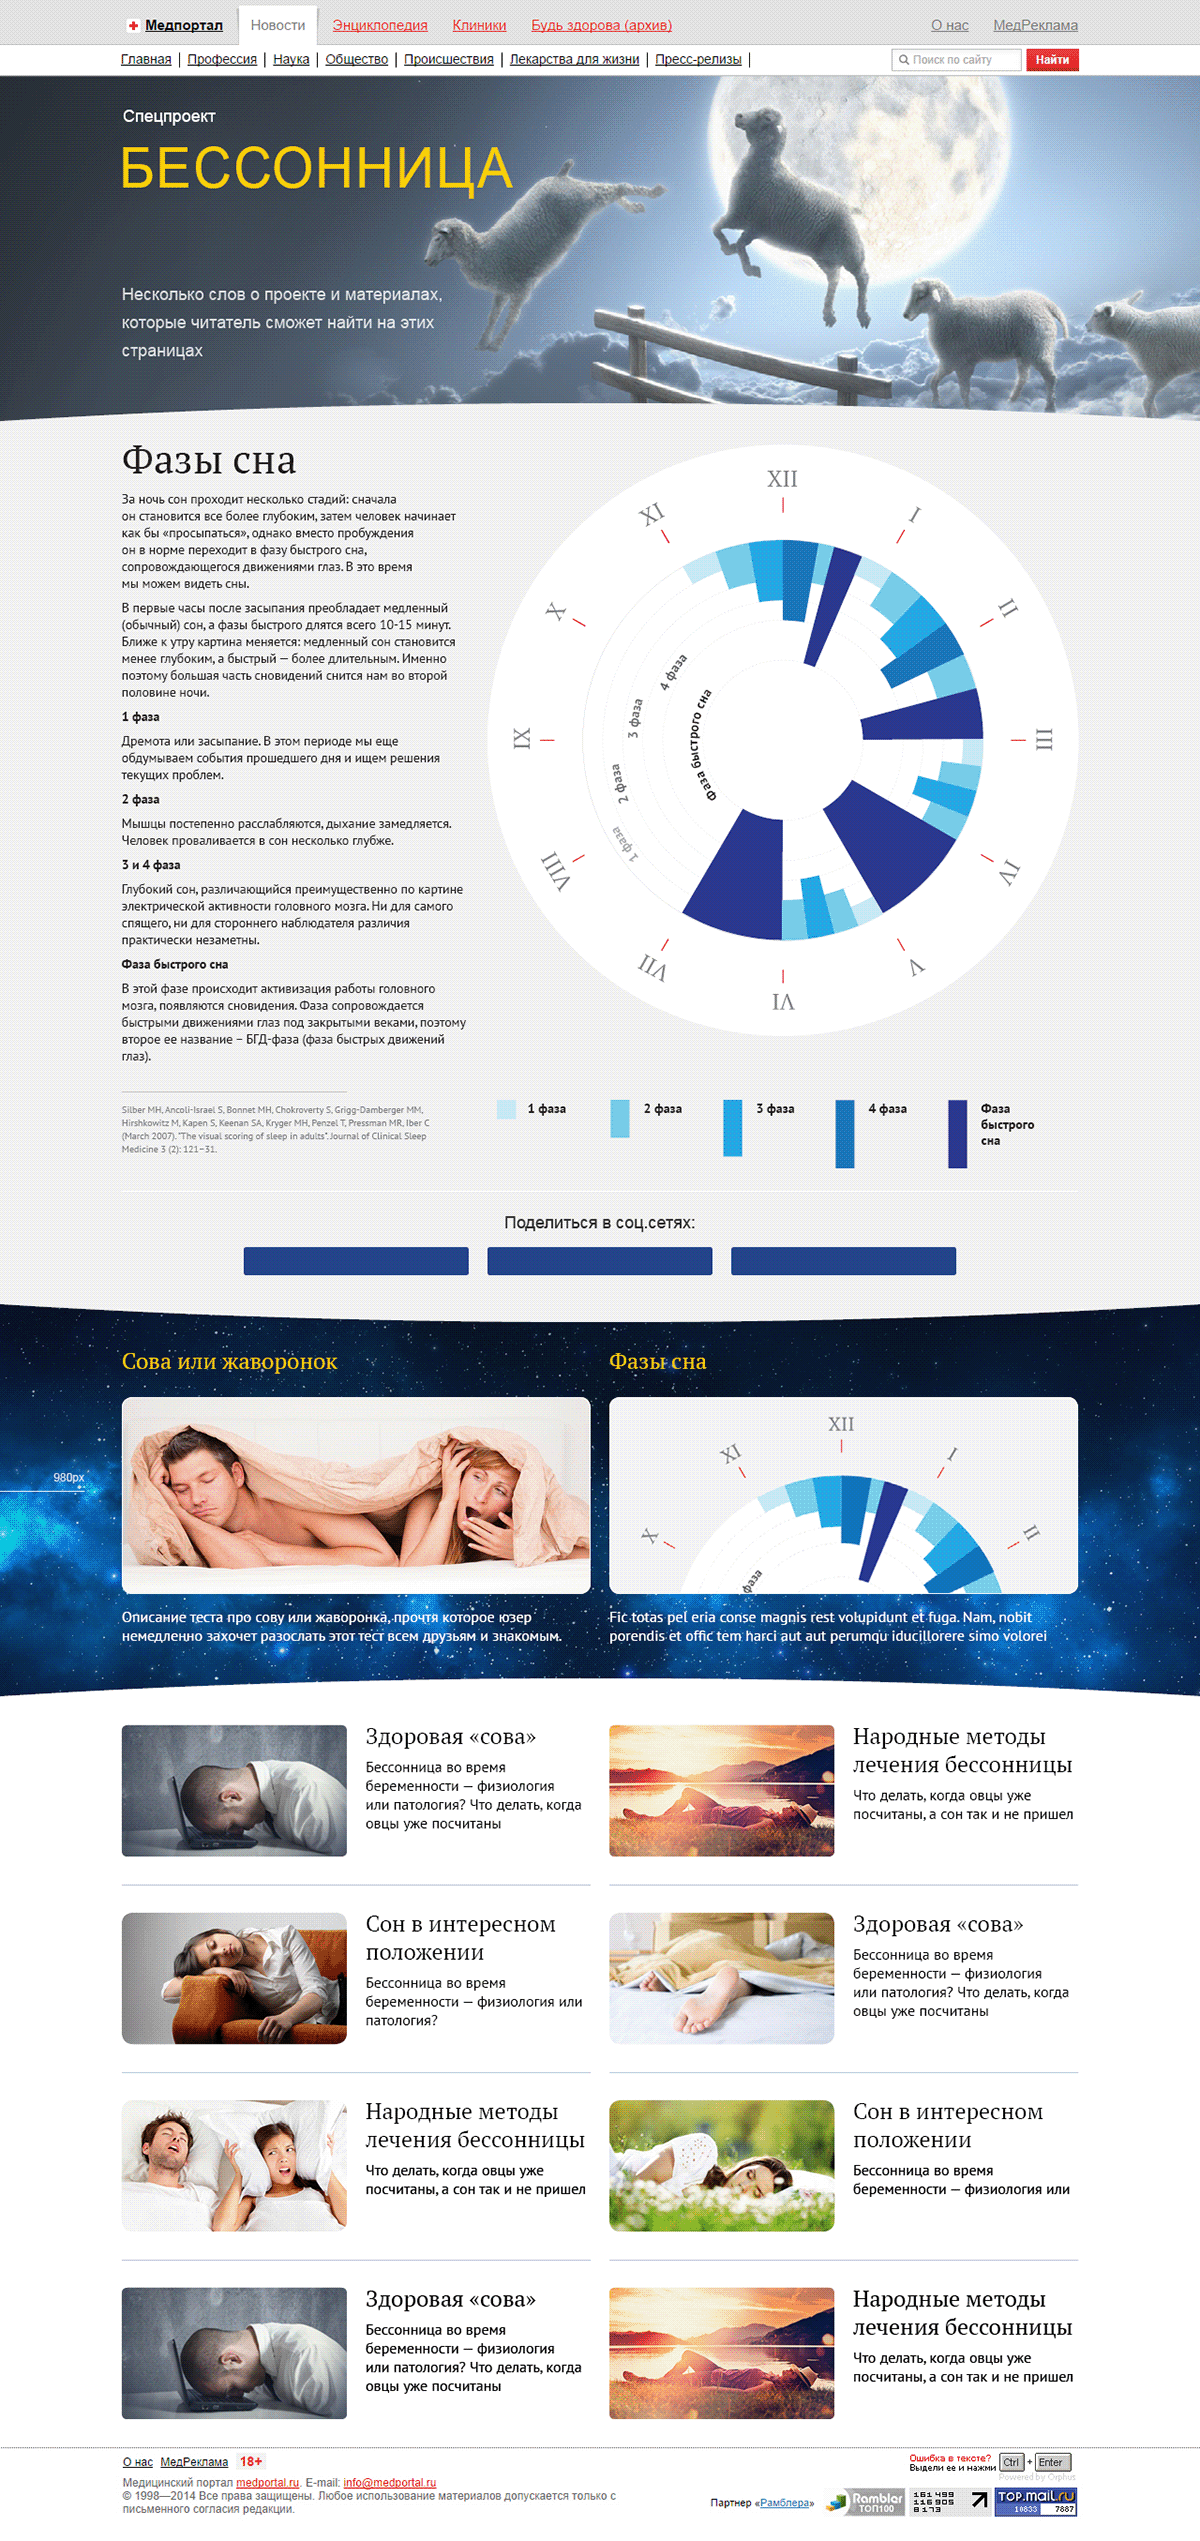 Website infographic medicine sleep